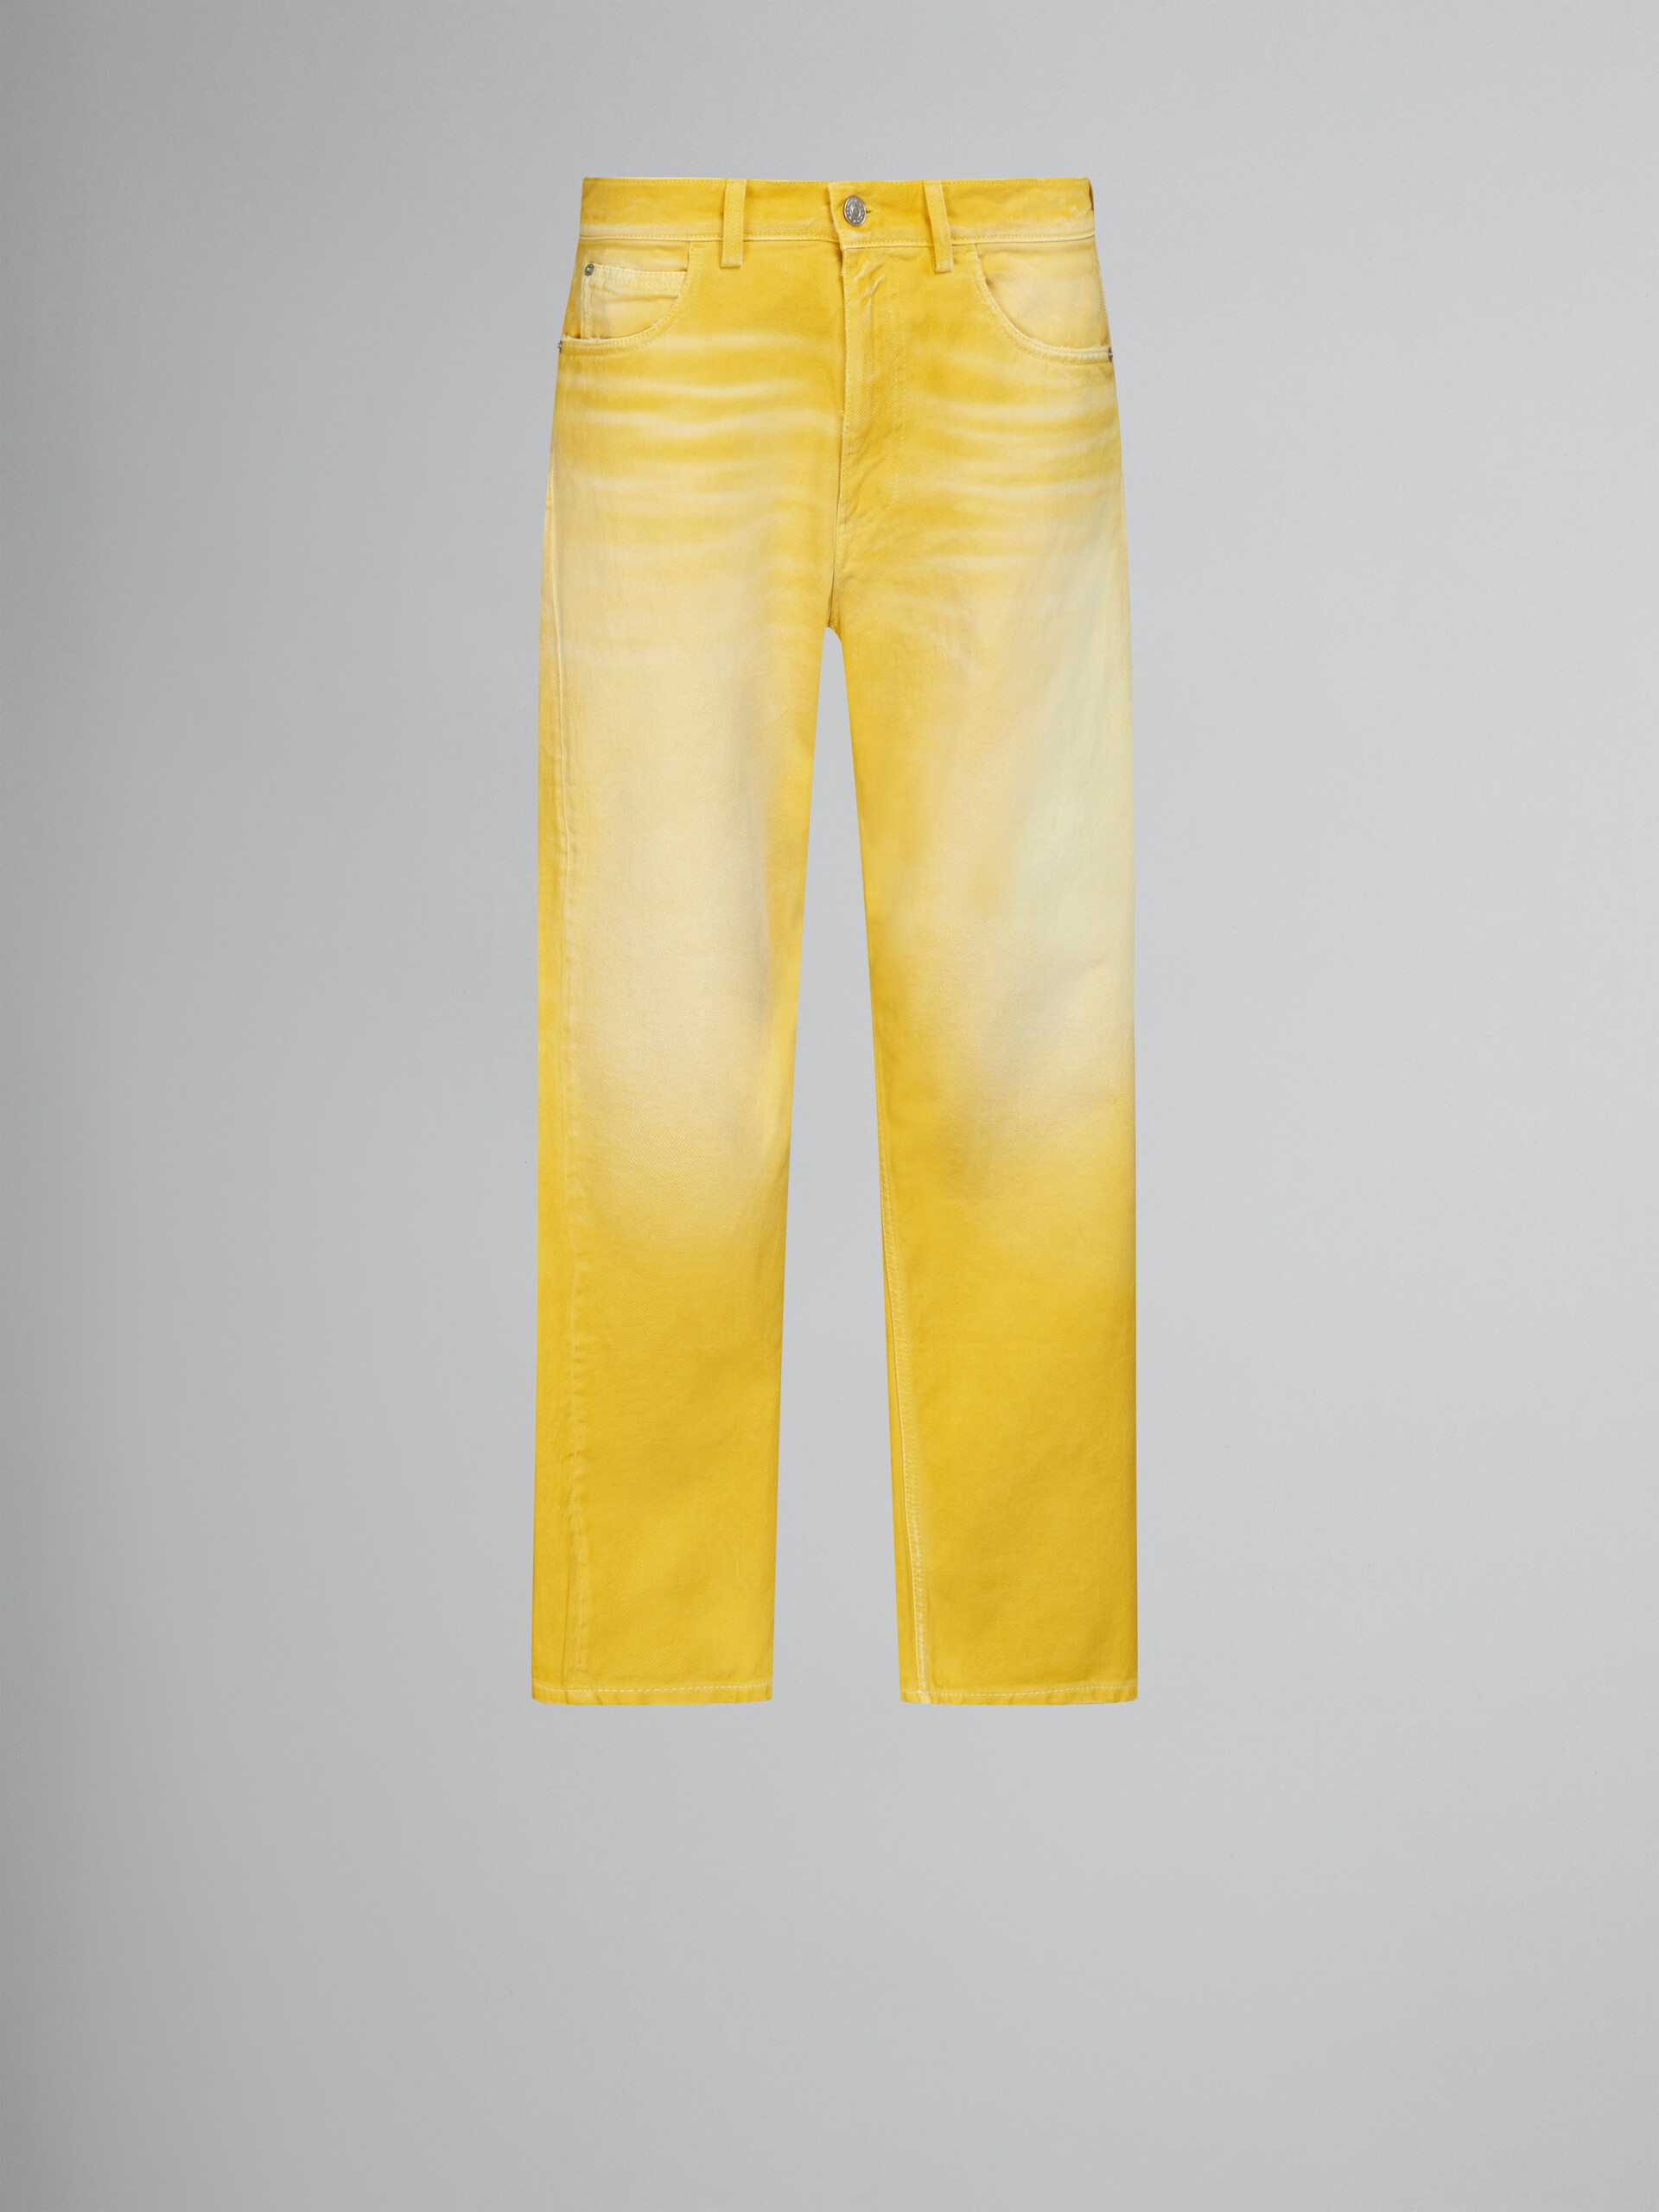 Pantalón de pernera recta amarillo de bull denim sobreteñido - Pantalones - Image 1